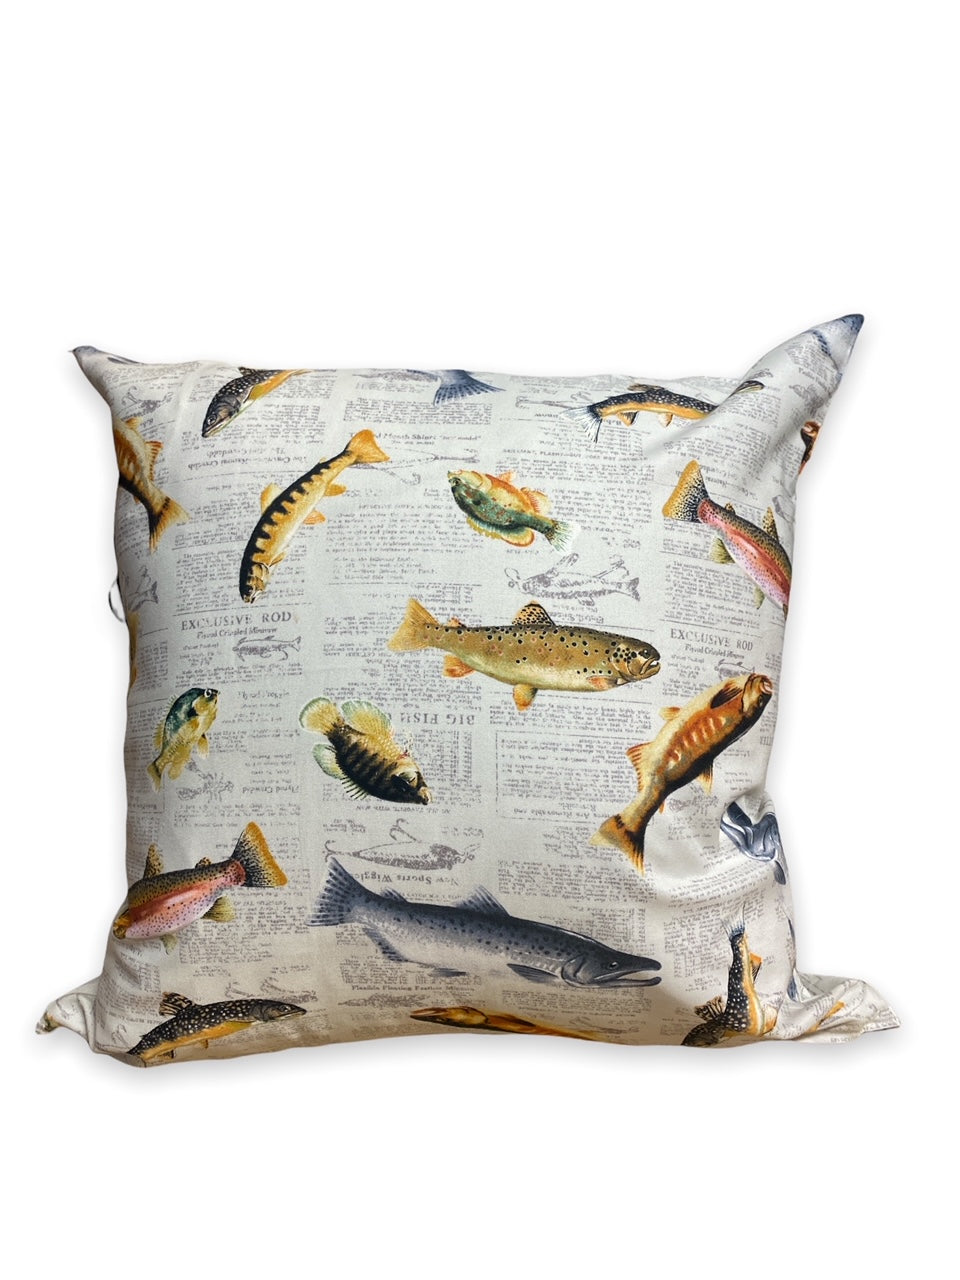 river fish pillows